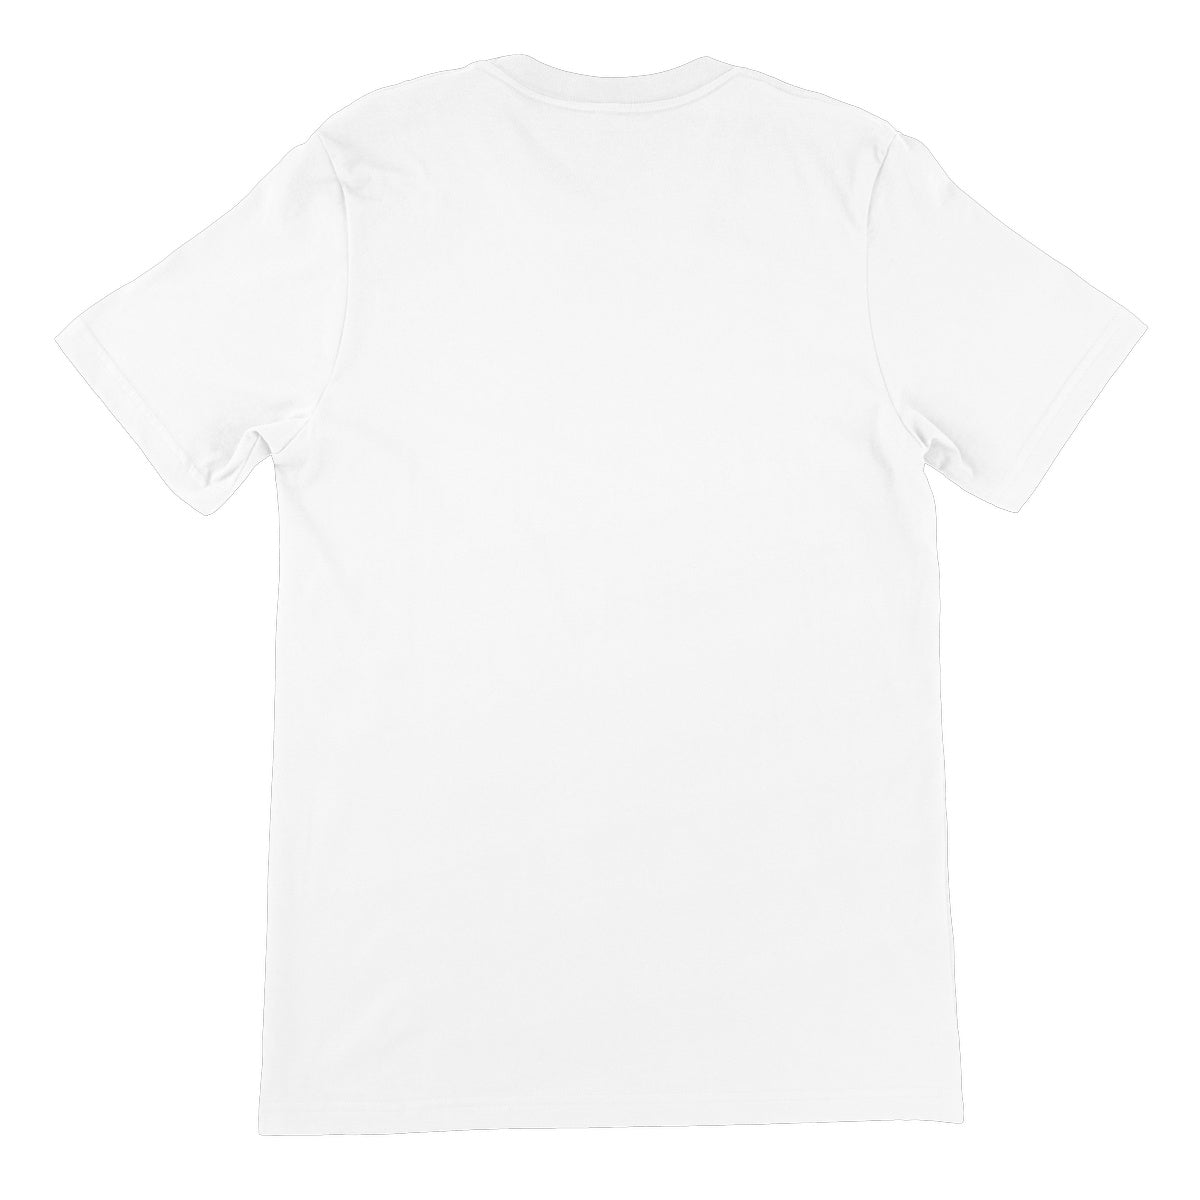 Let's Wrestle Apparel Unisex Short Sleeve T-Shirt